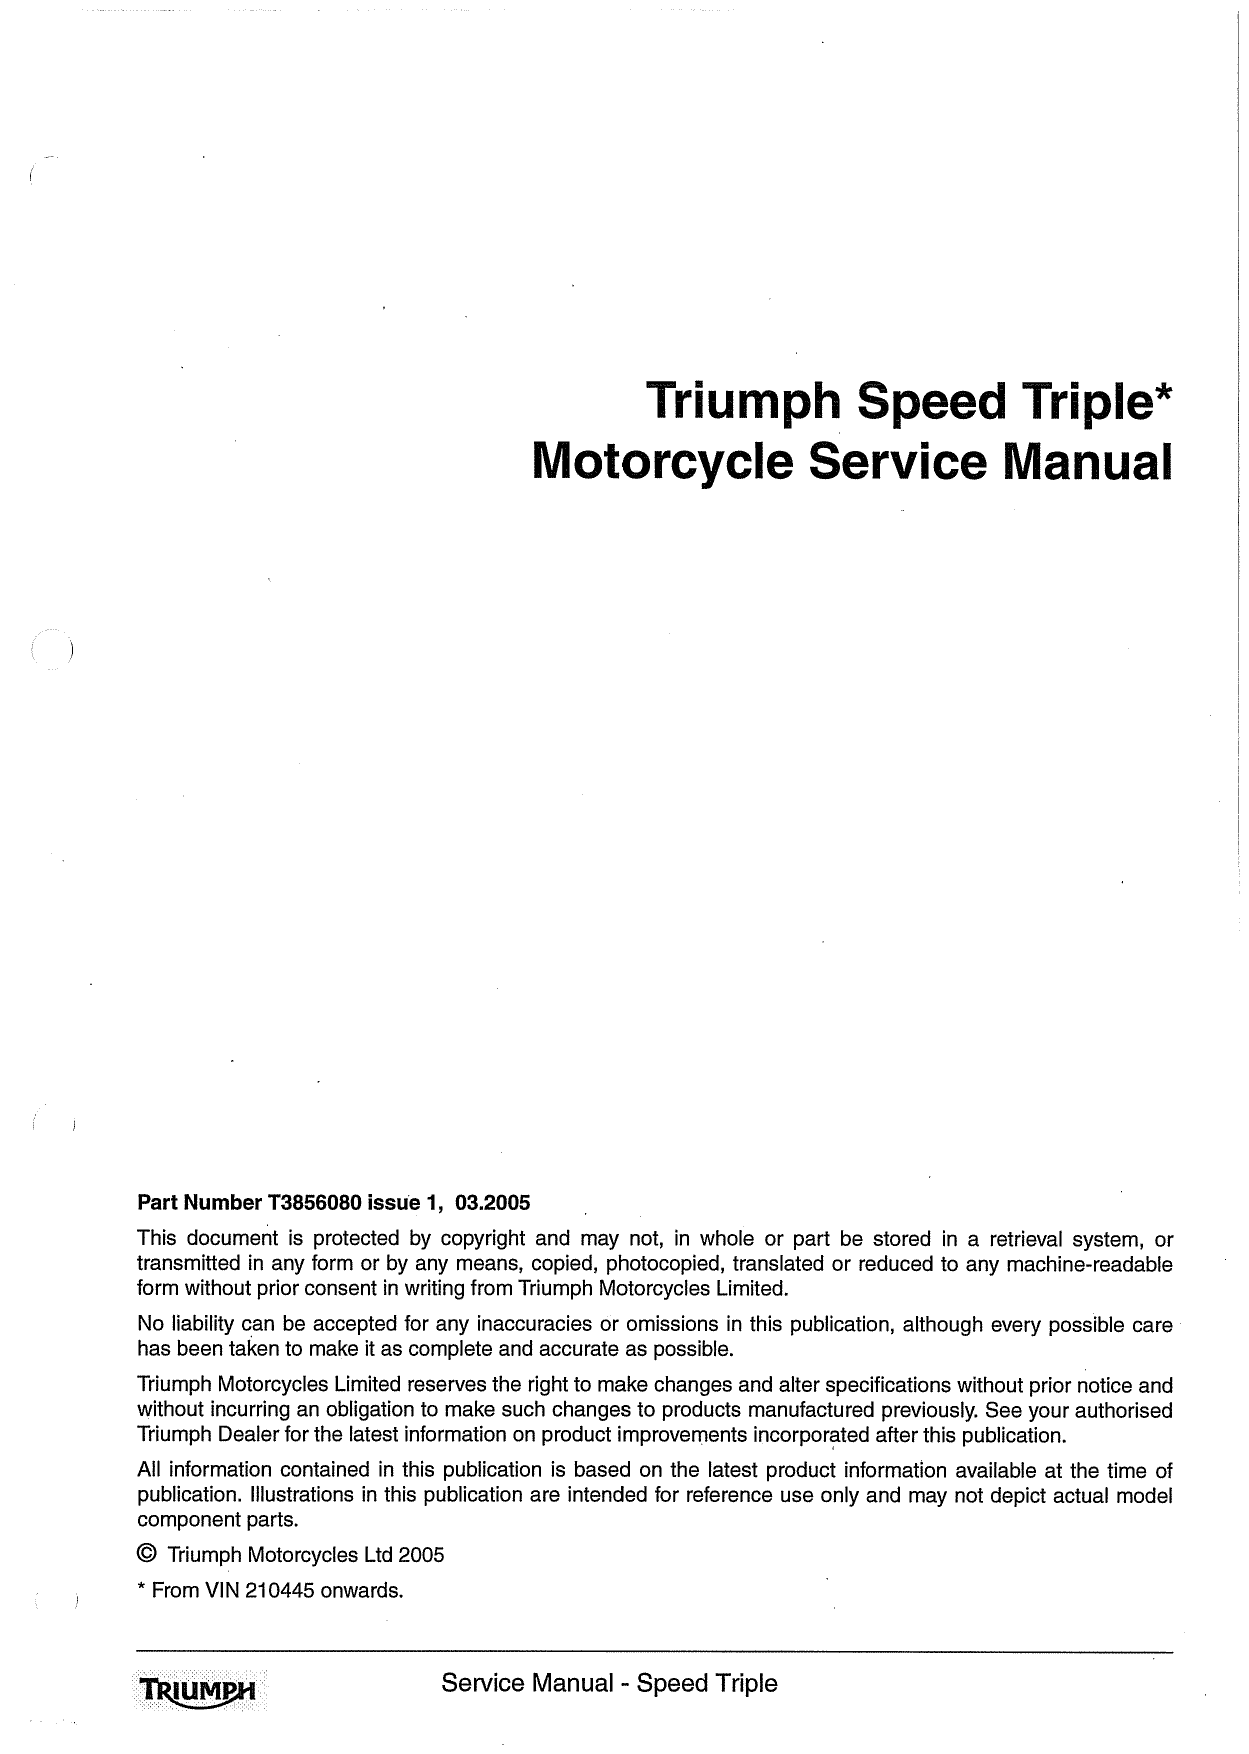 2005-2009 Triumph Speed Triple 1050 VIN 210445 manual Preview image 6